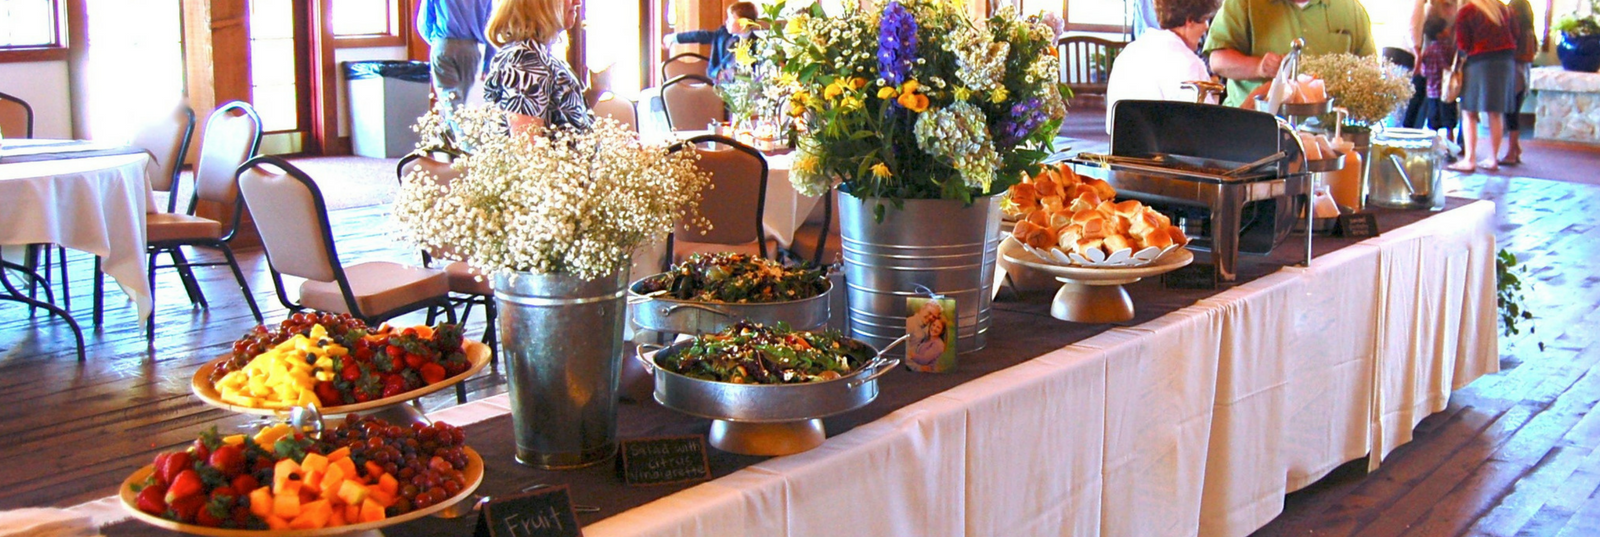 wedding buffet table design